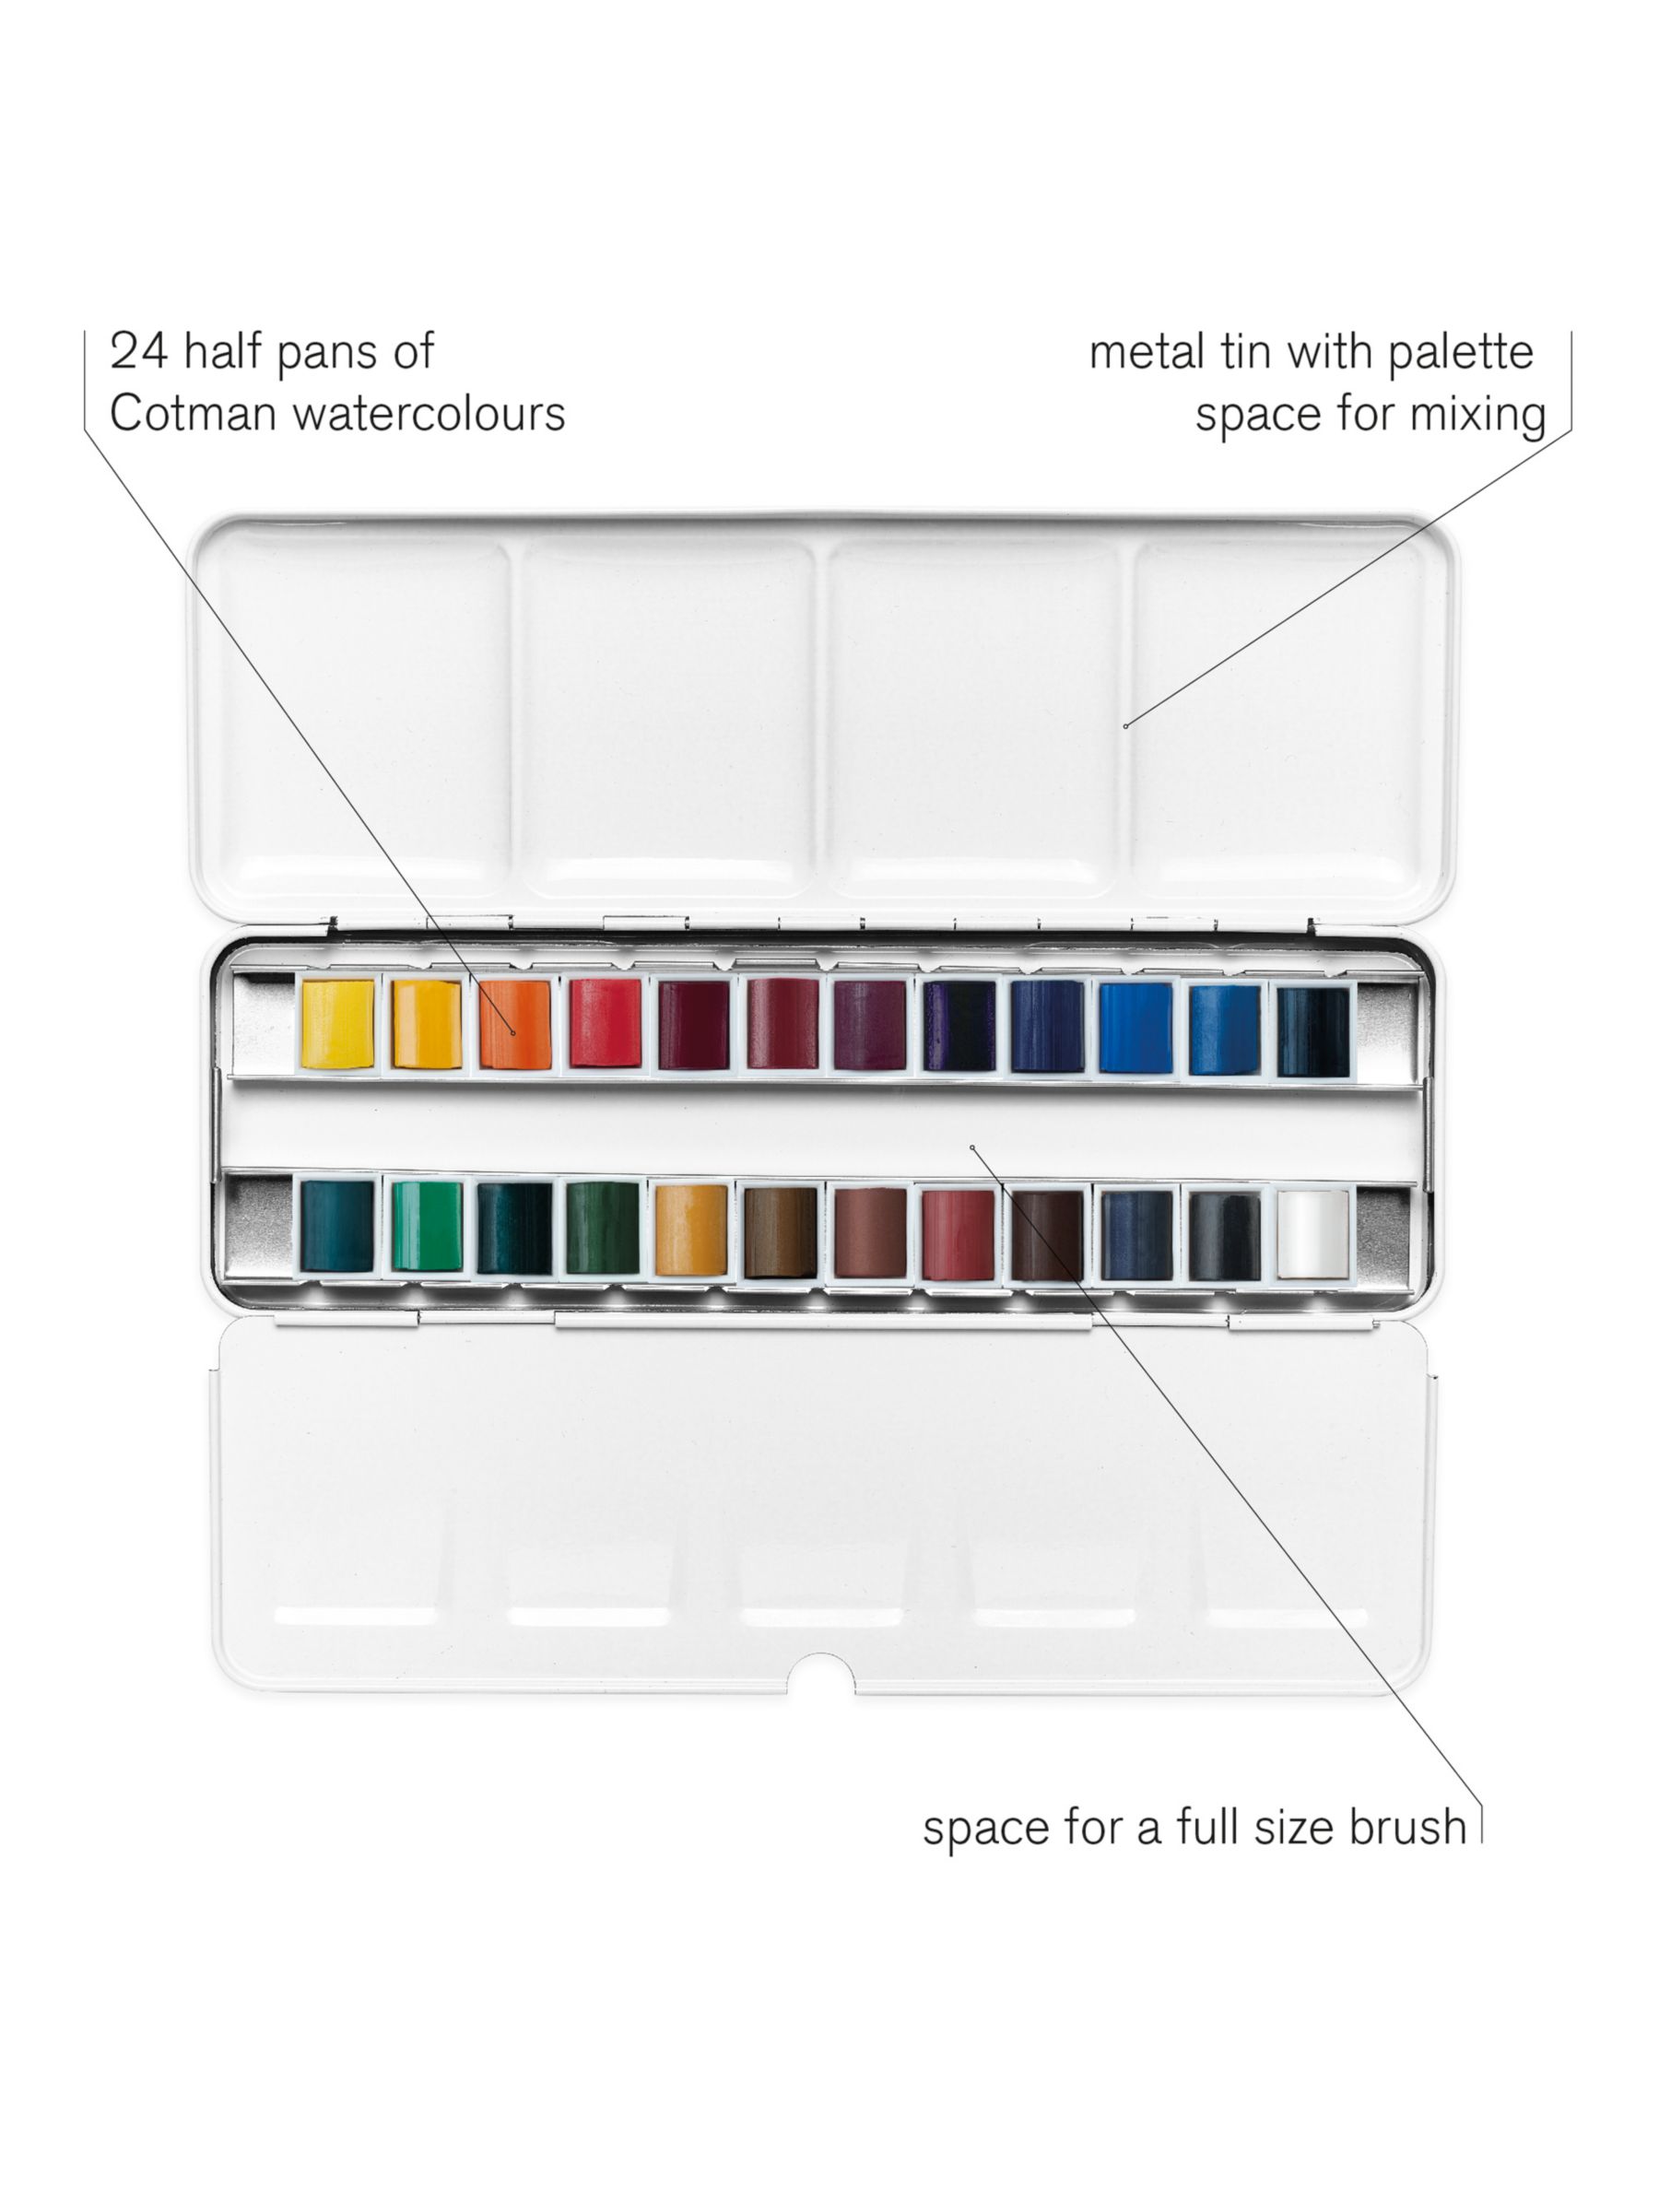 Winsor & Newton Professional Watercolor – Complete Travel Tin, Half Pan Set  of 24